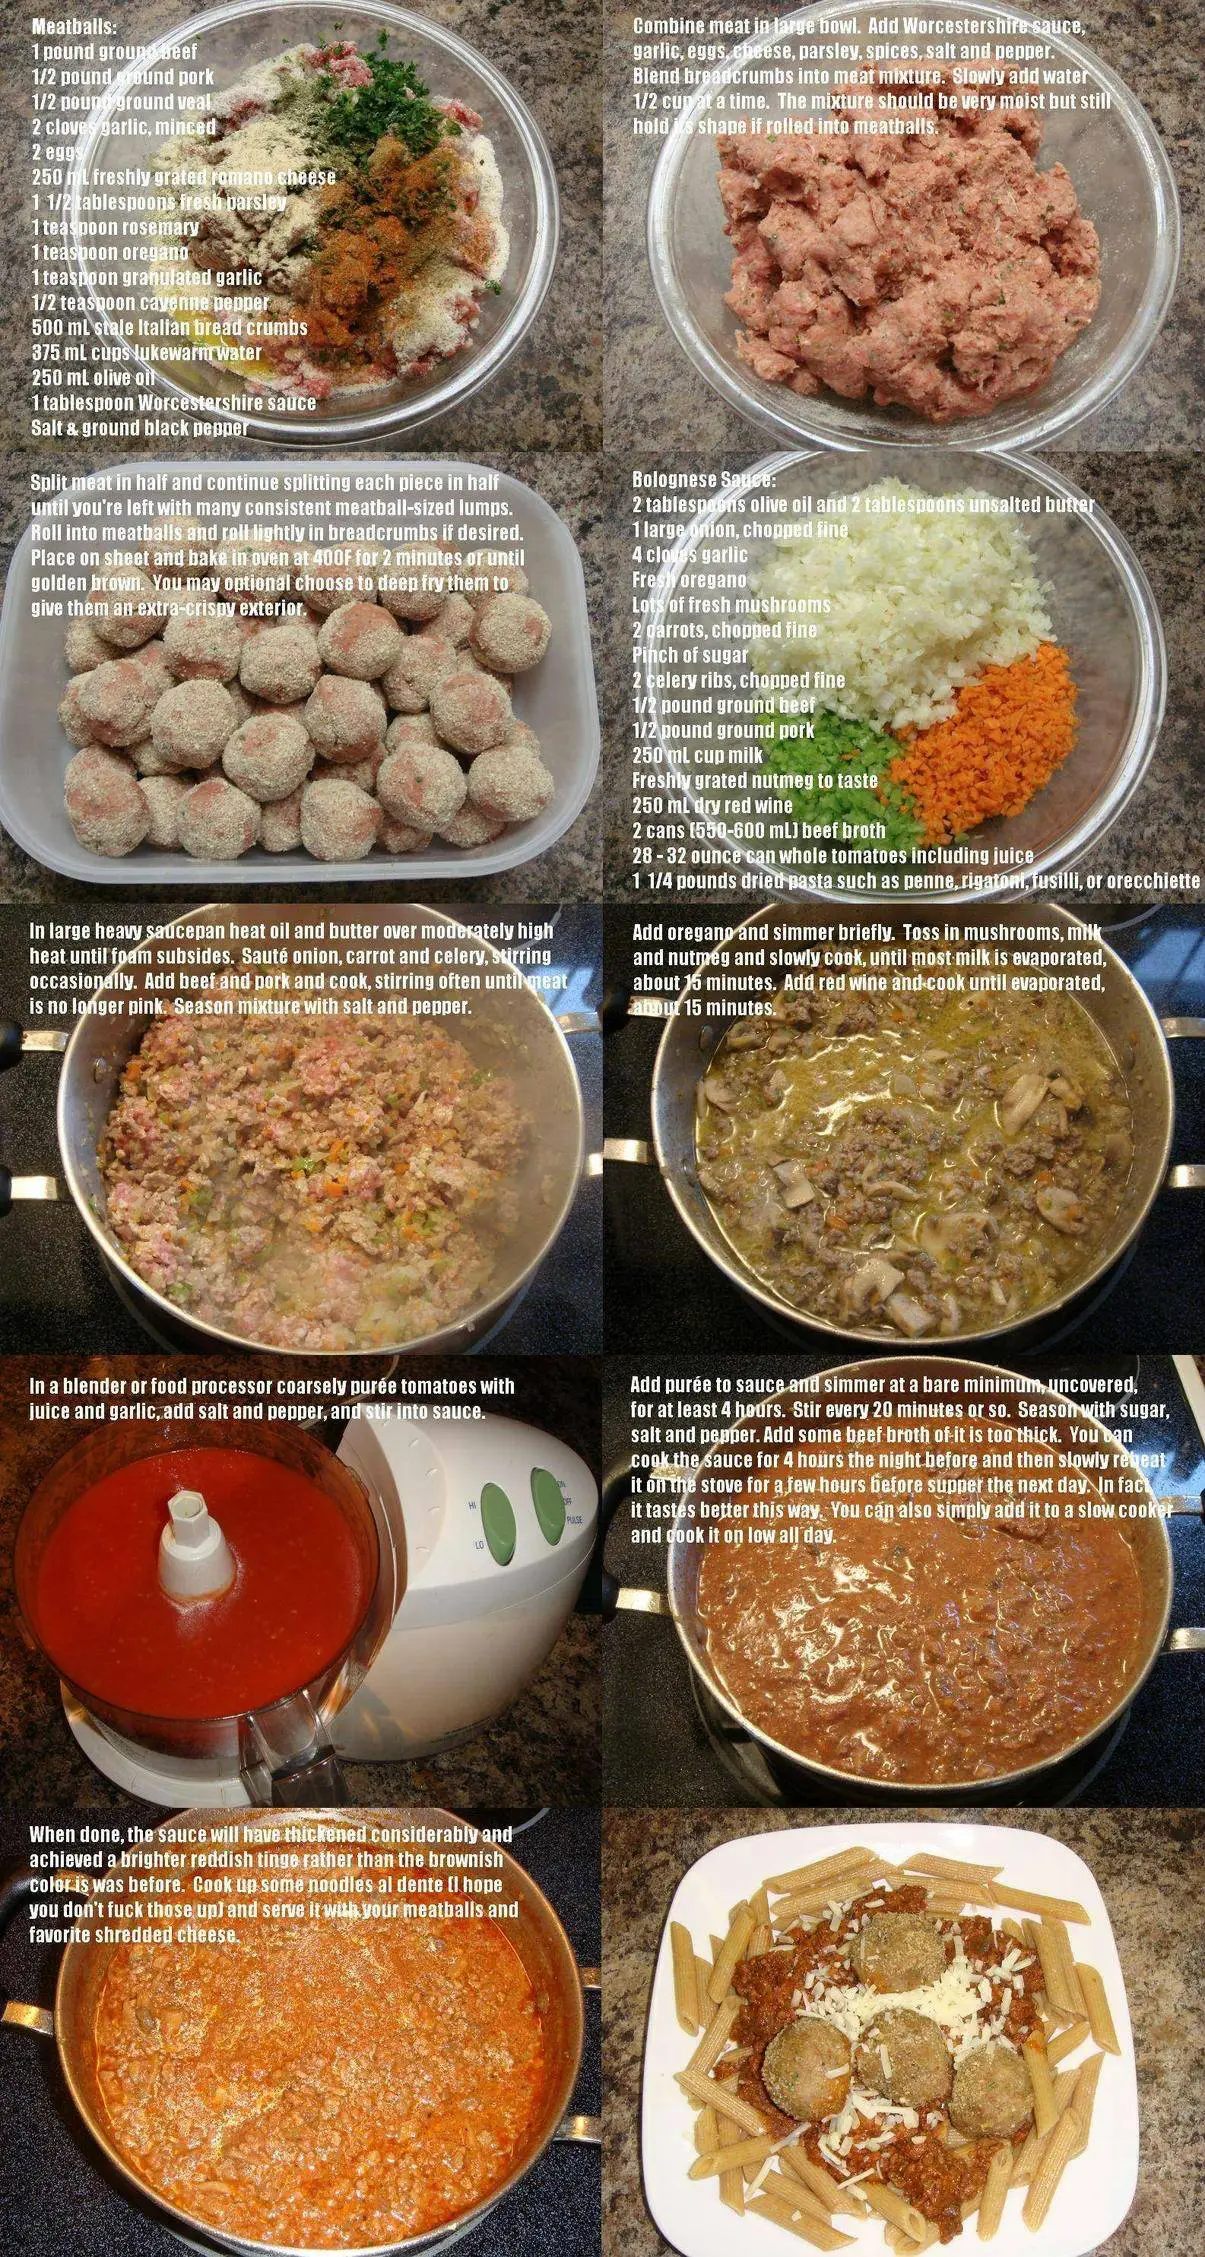 /fit/ recipe - Meatballs